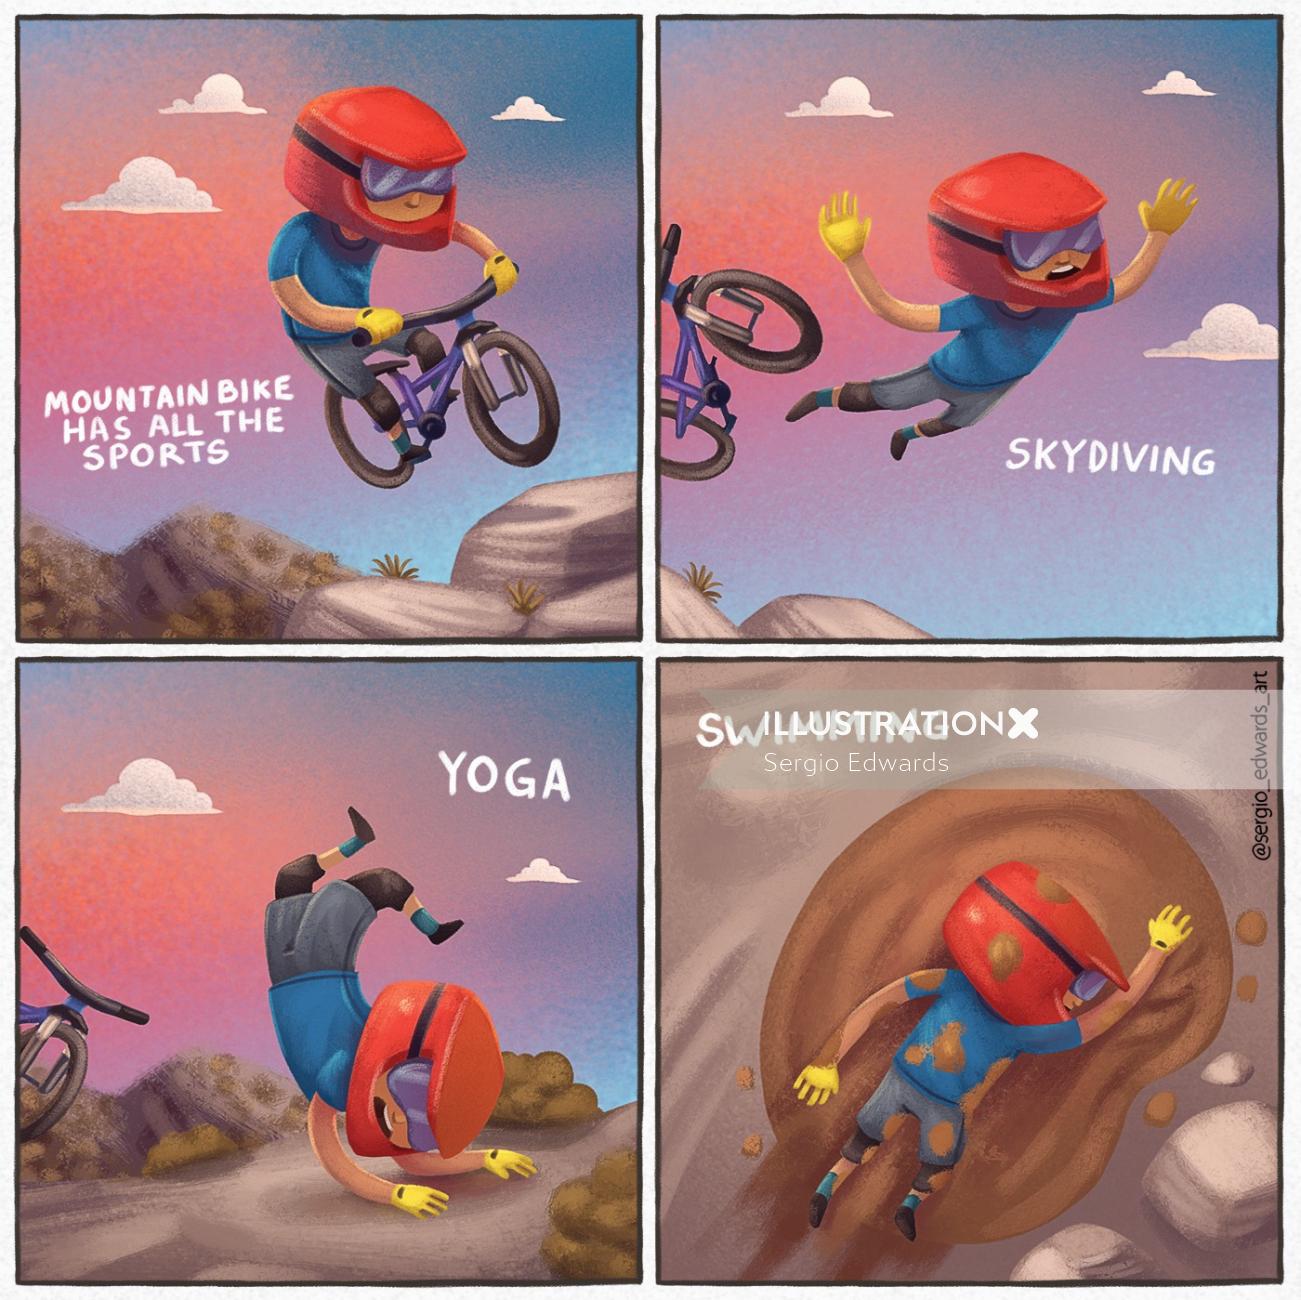 Comic strip of mountain bike sports